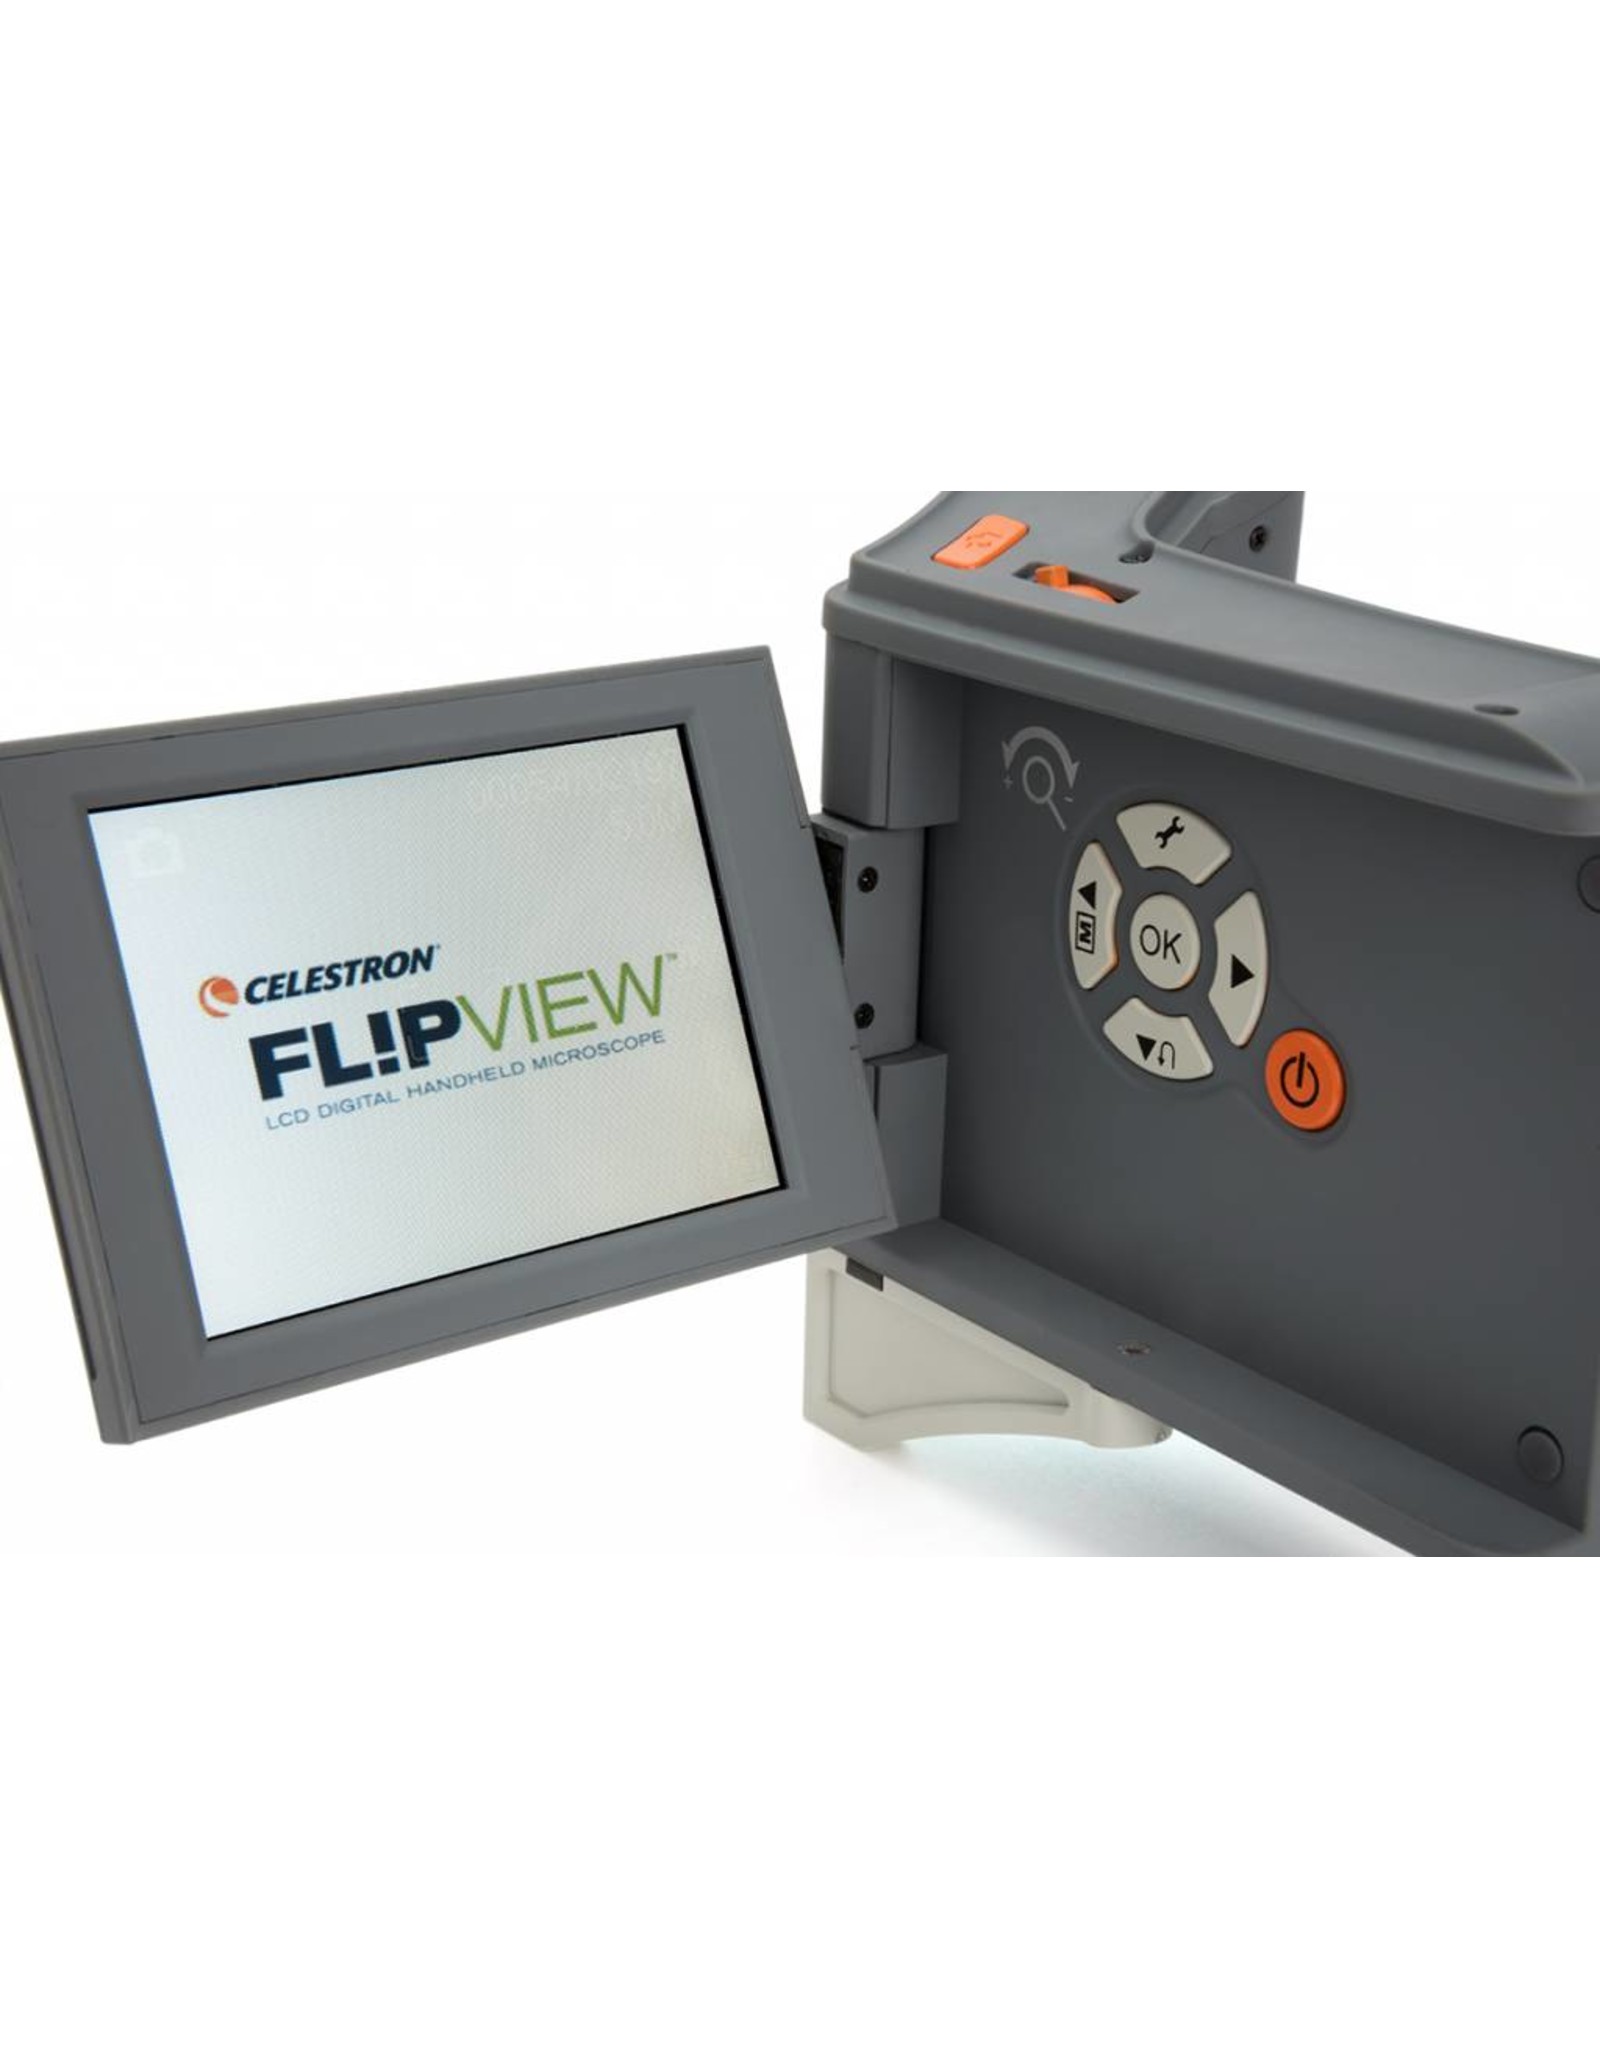 Celestron Celestron FlipView- 5MP LCD Portable Microscope (LIMITED QUANTITIES!)